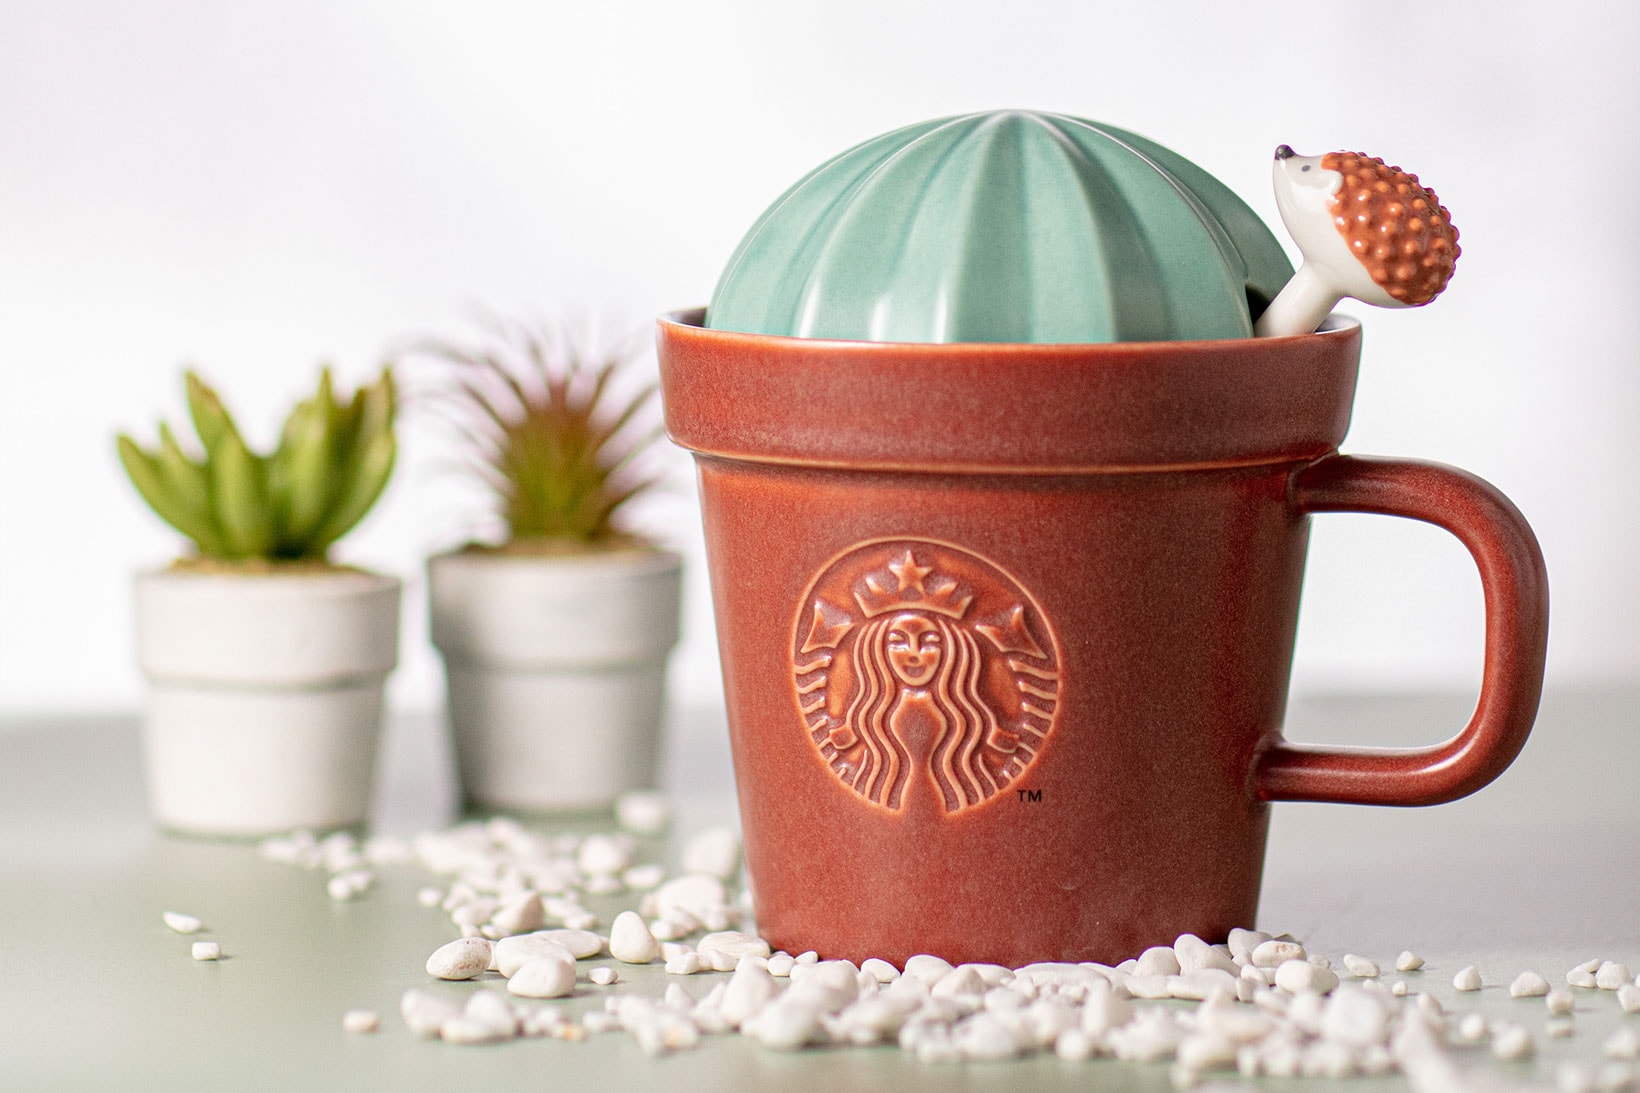 starbucks hedgehog coffee collection merch hong kong hk cup mug cover lid